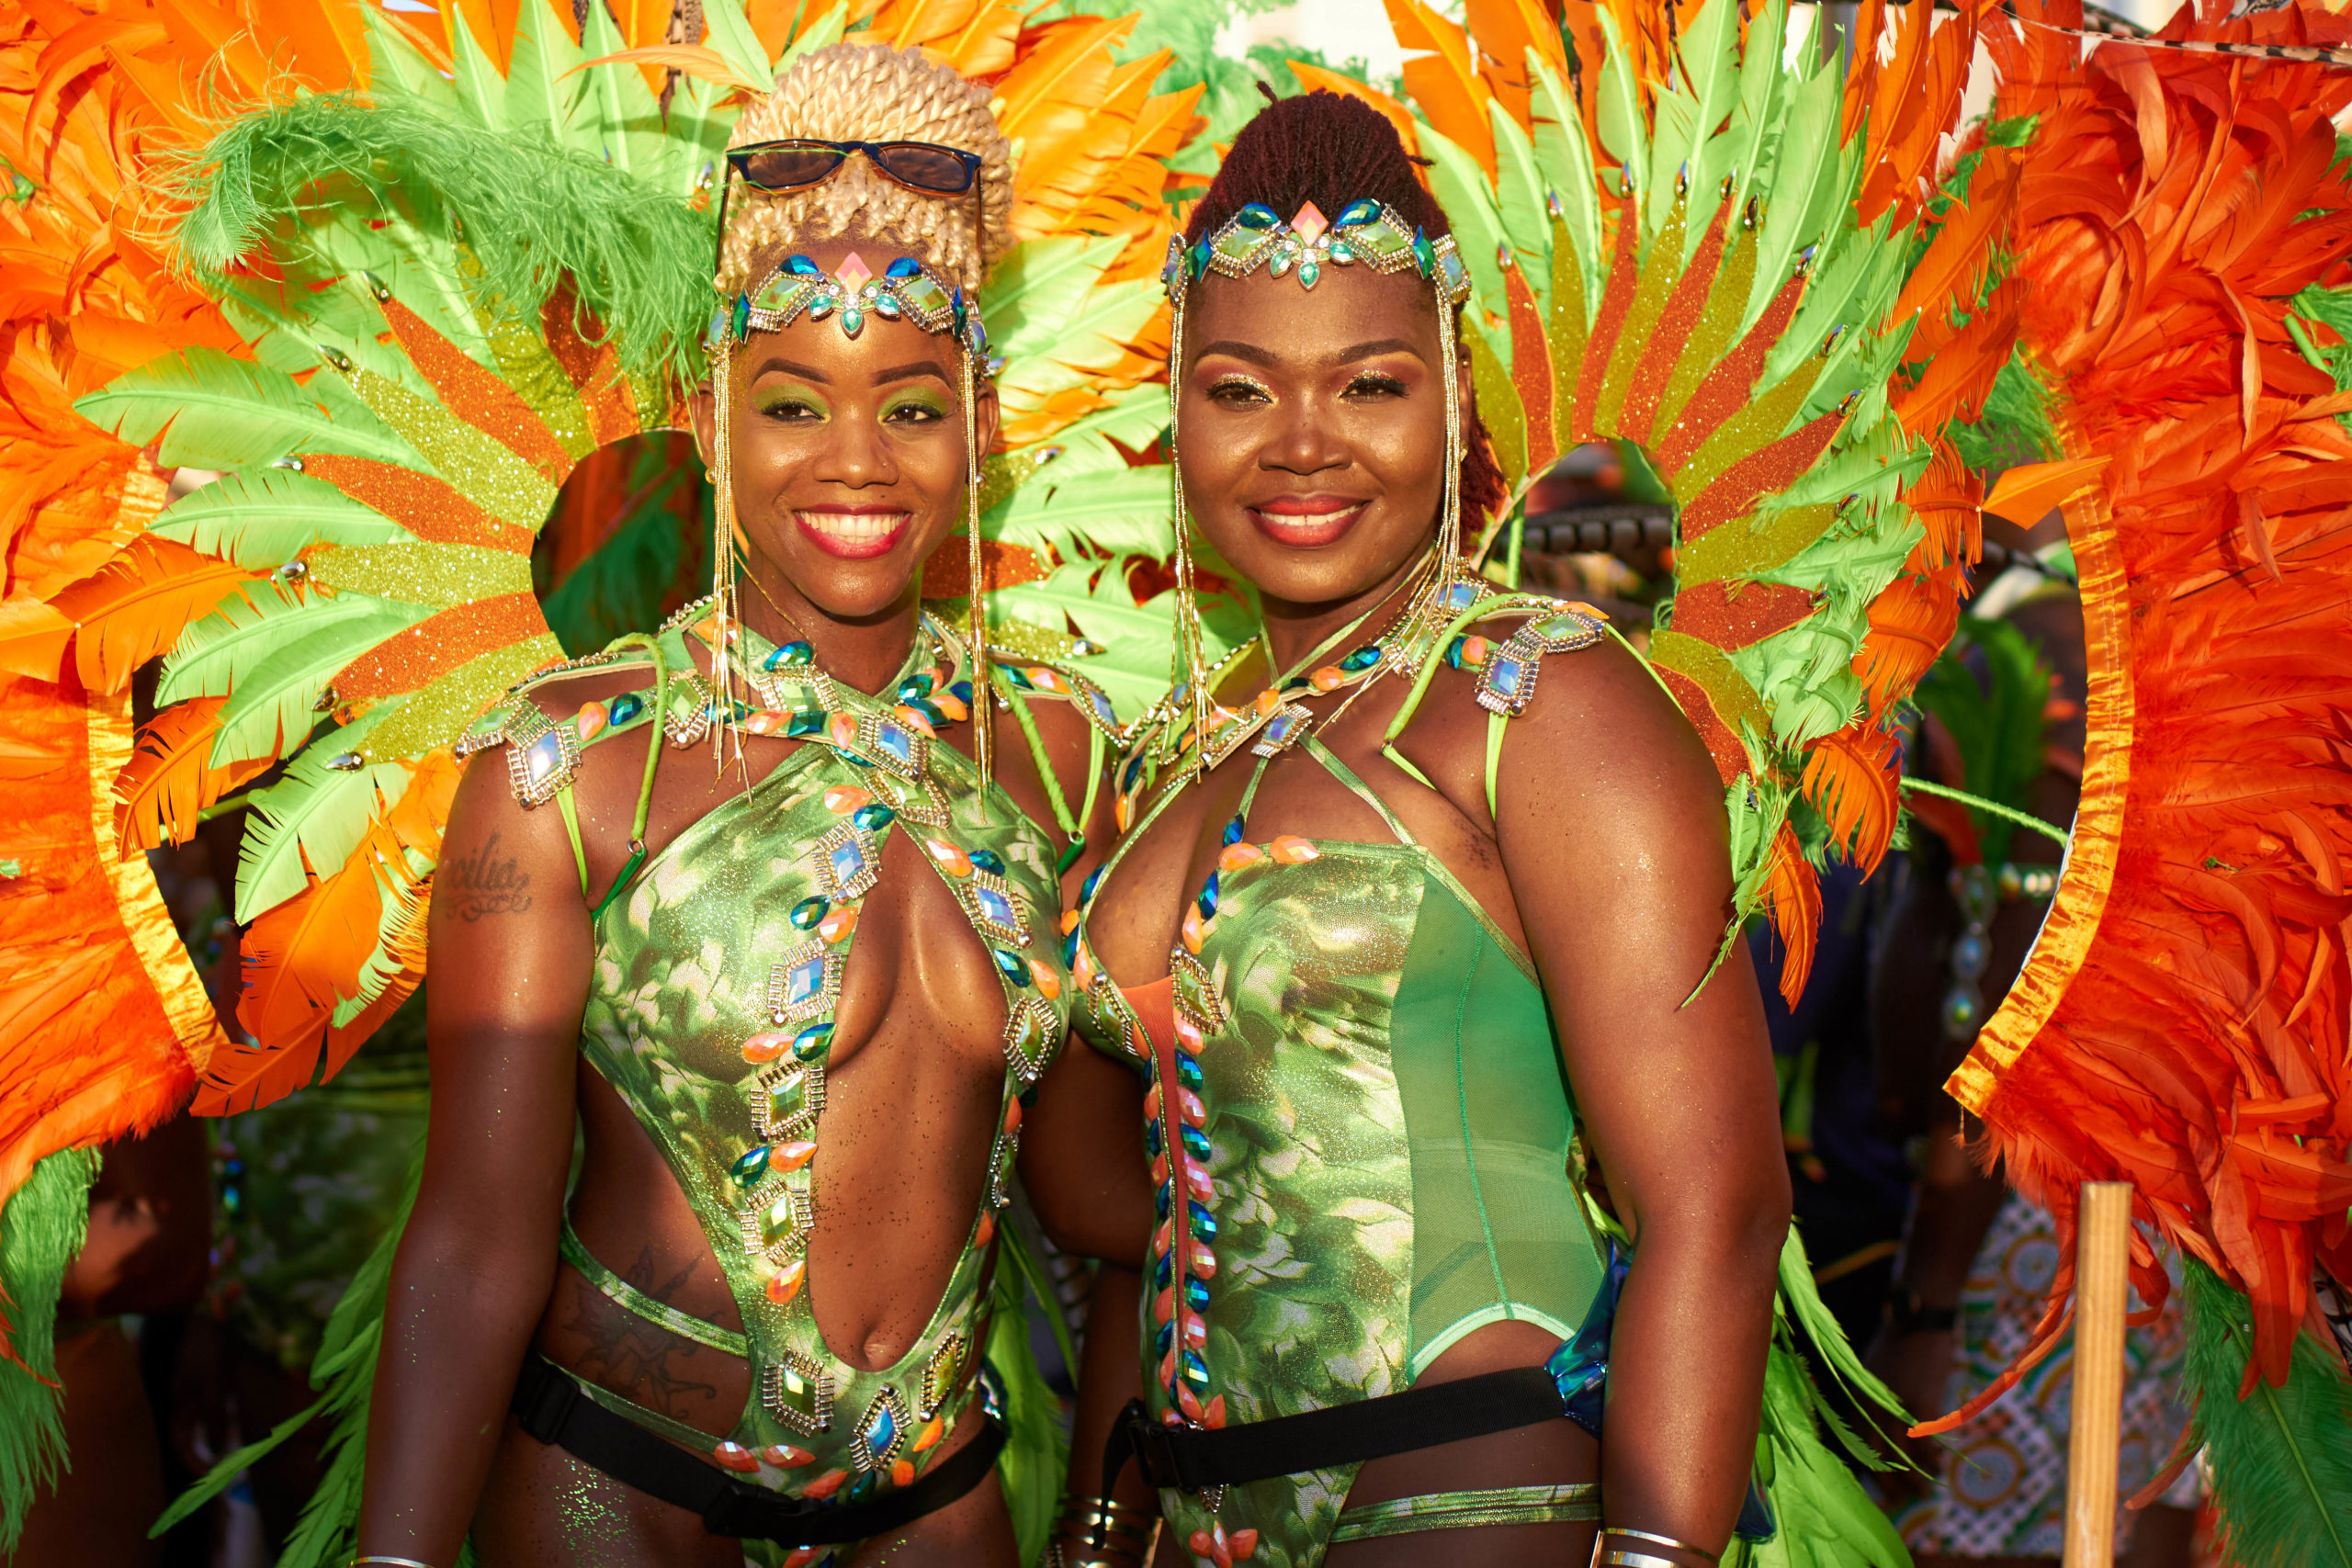 Antigua Carnival 2019